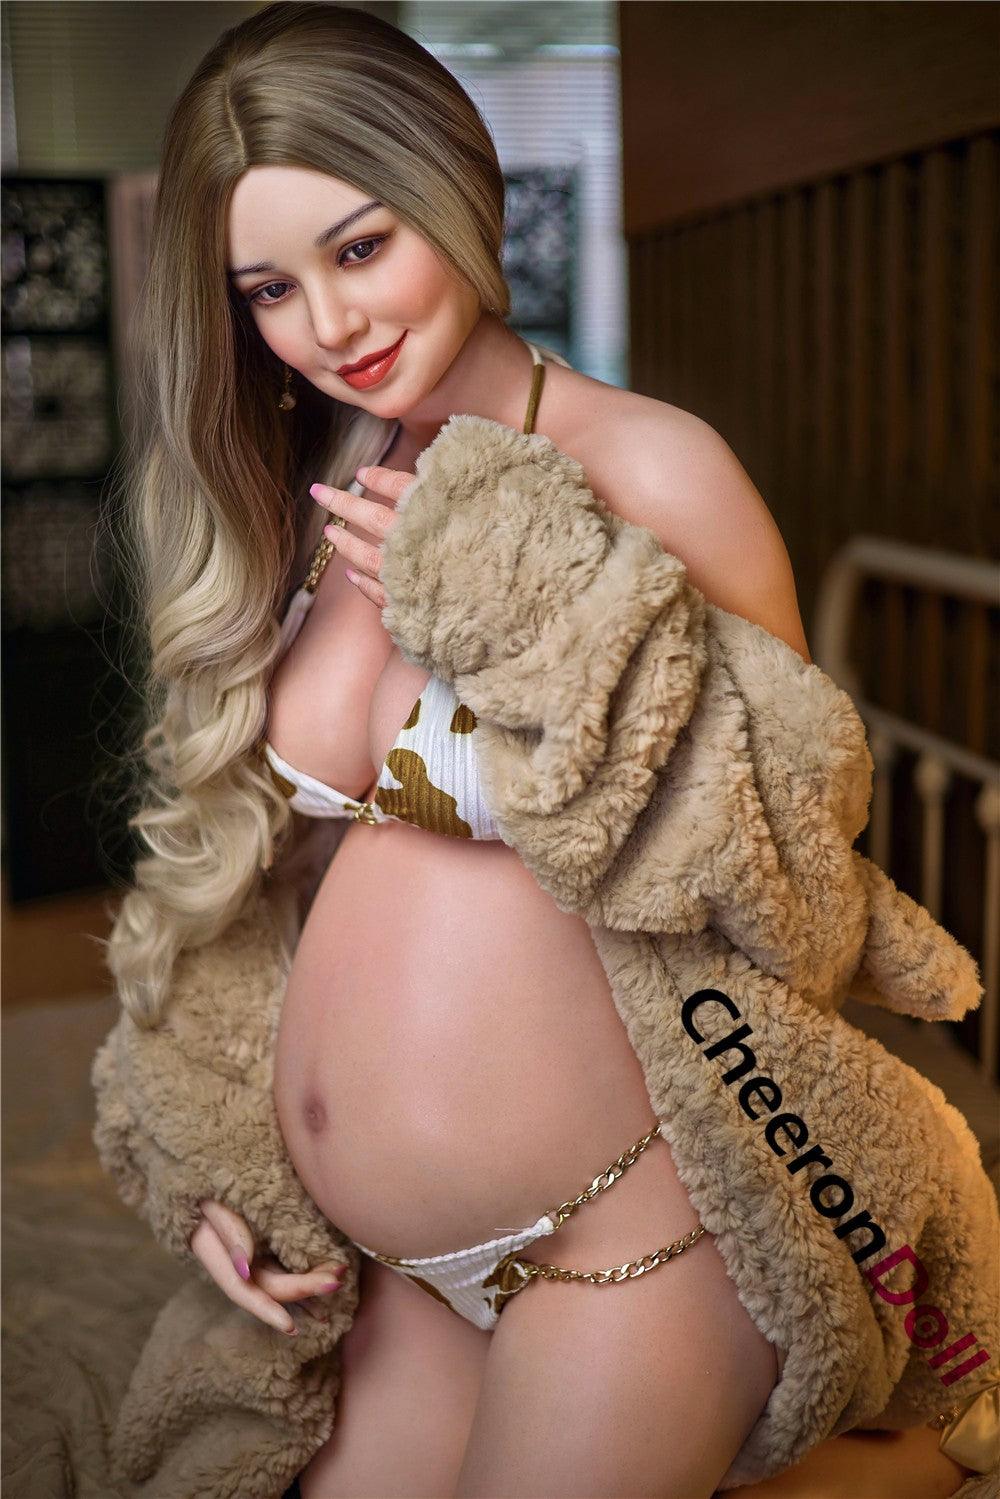 CHEERONDOLL 158CM SEXY SILICONE BLOND PREGNANT SEX DOLL S3 ROSE - Cheeron Doll